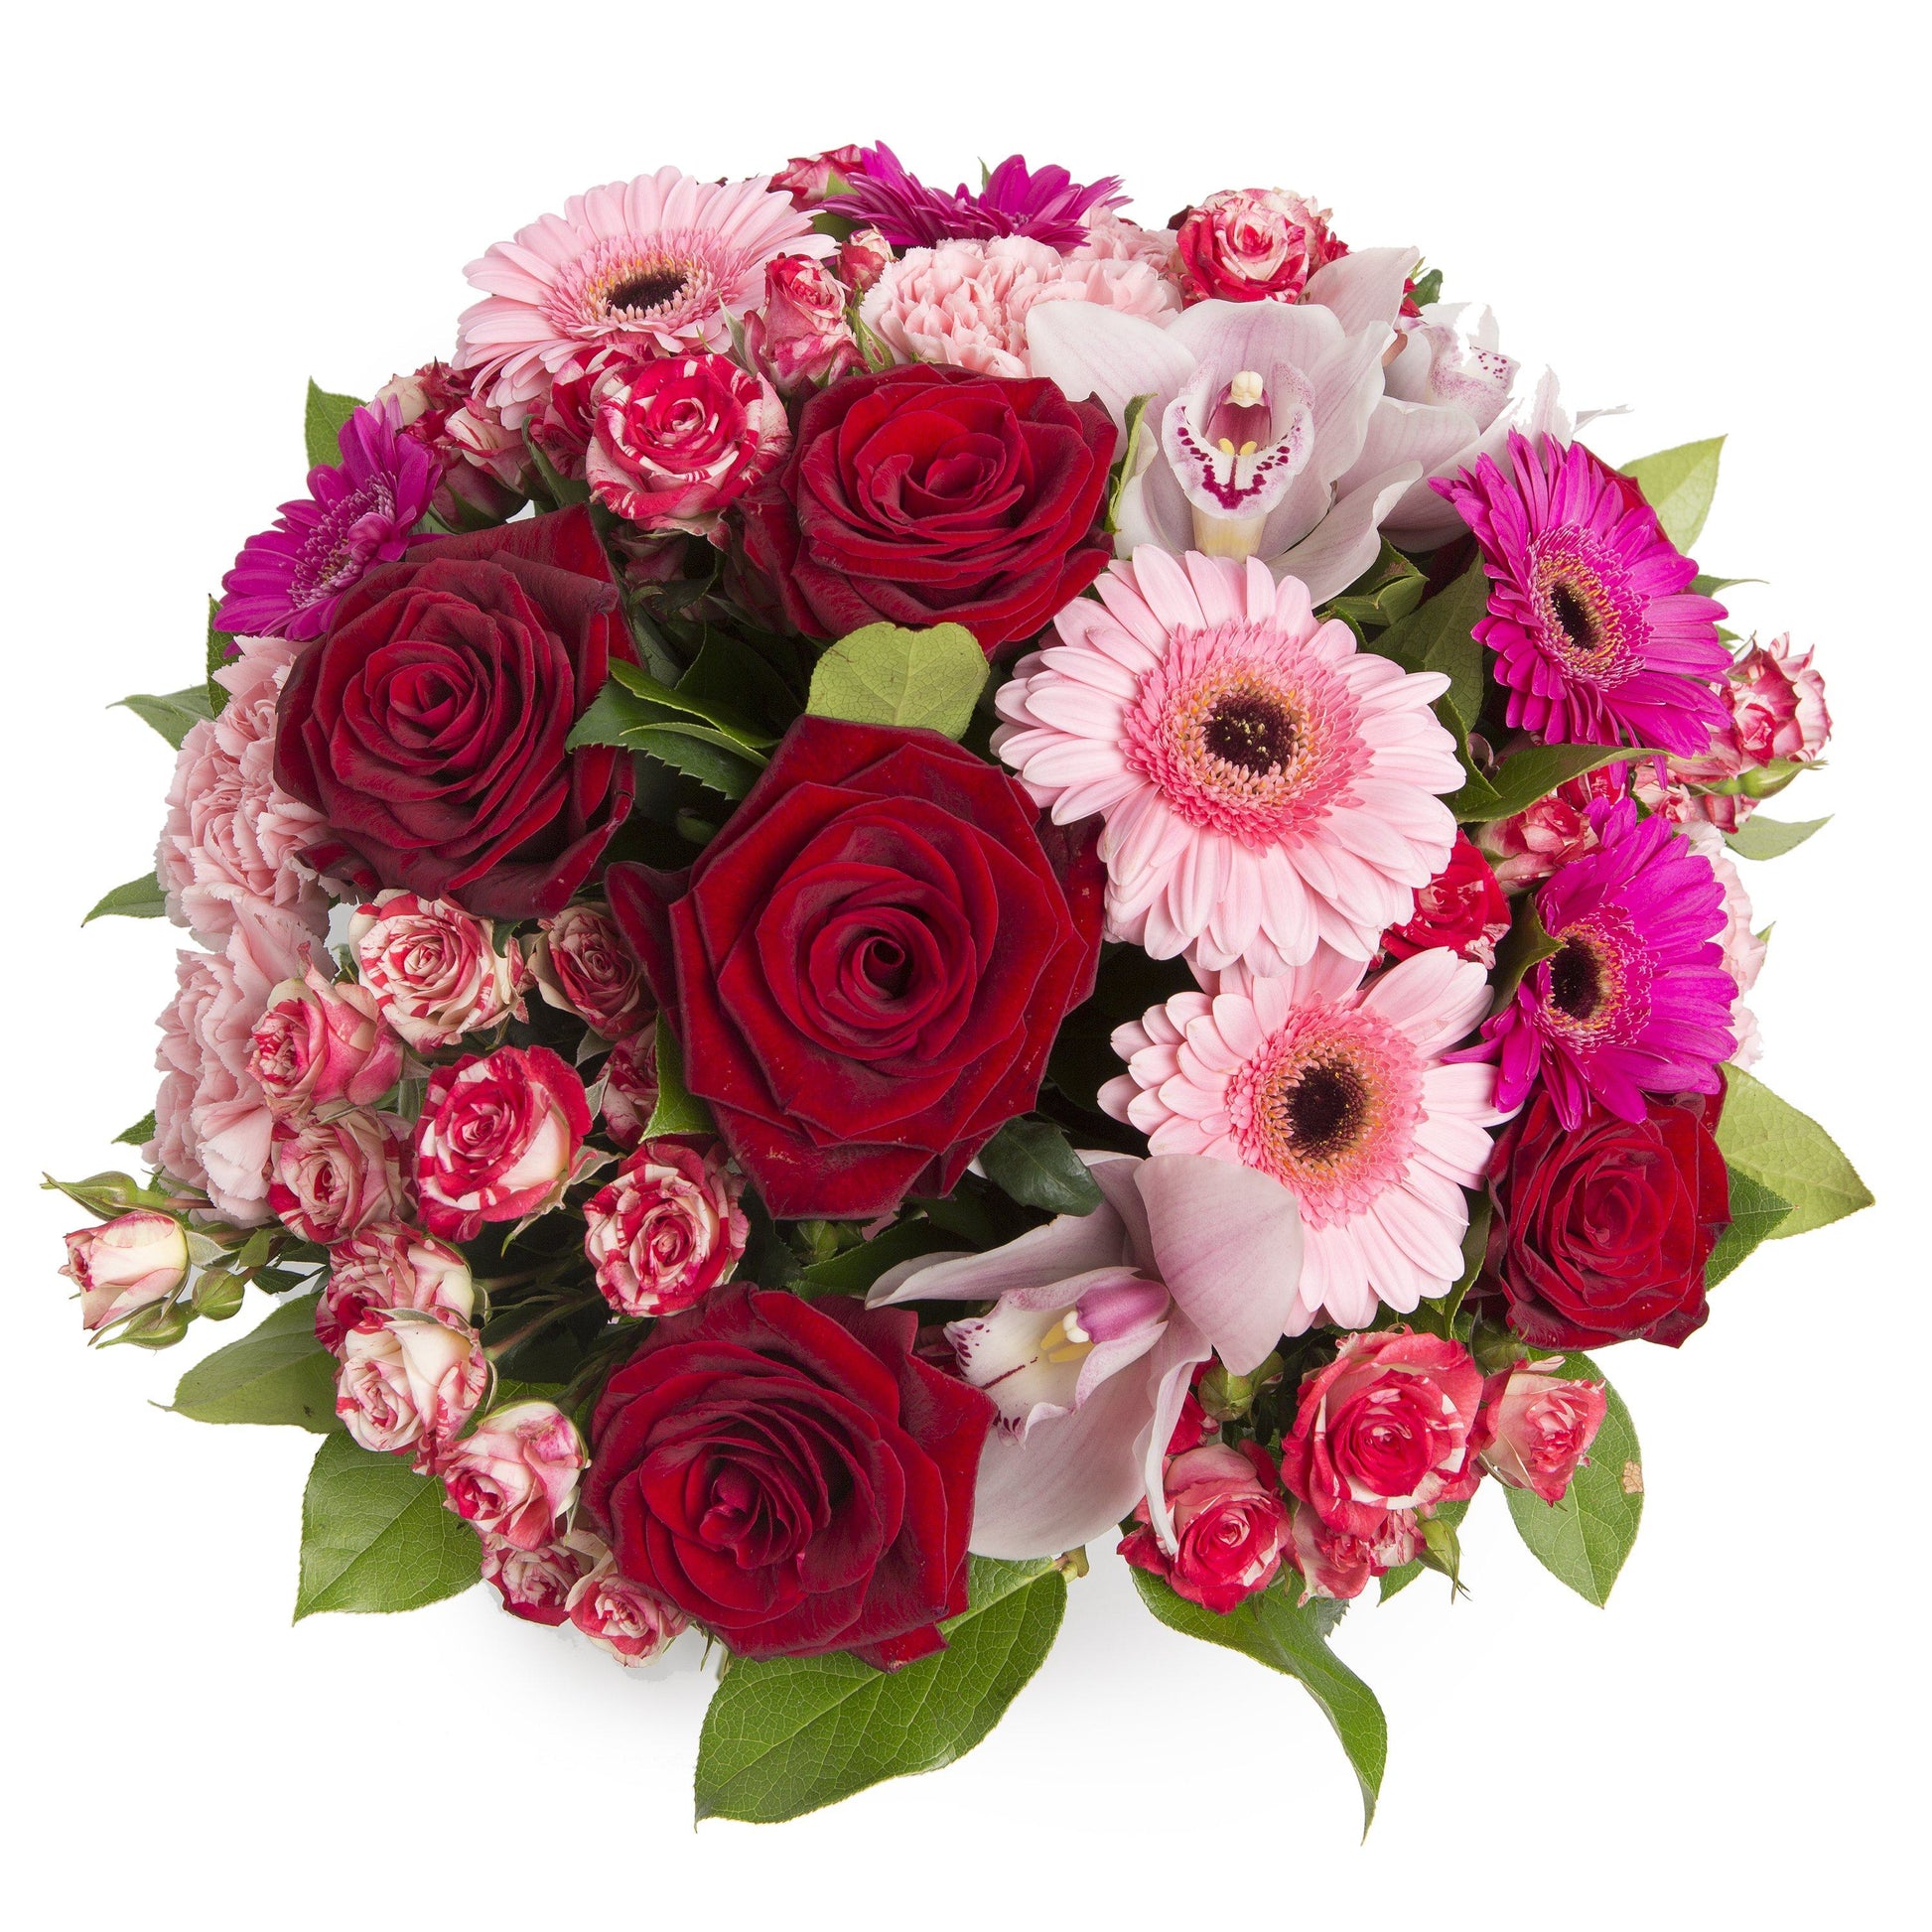 Wonderful Wish Bouquet